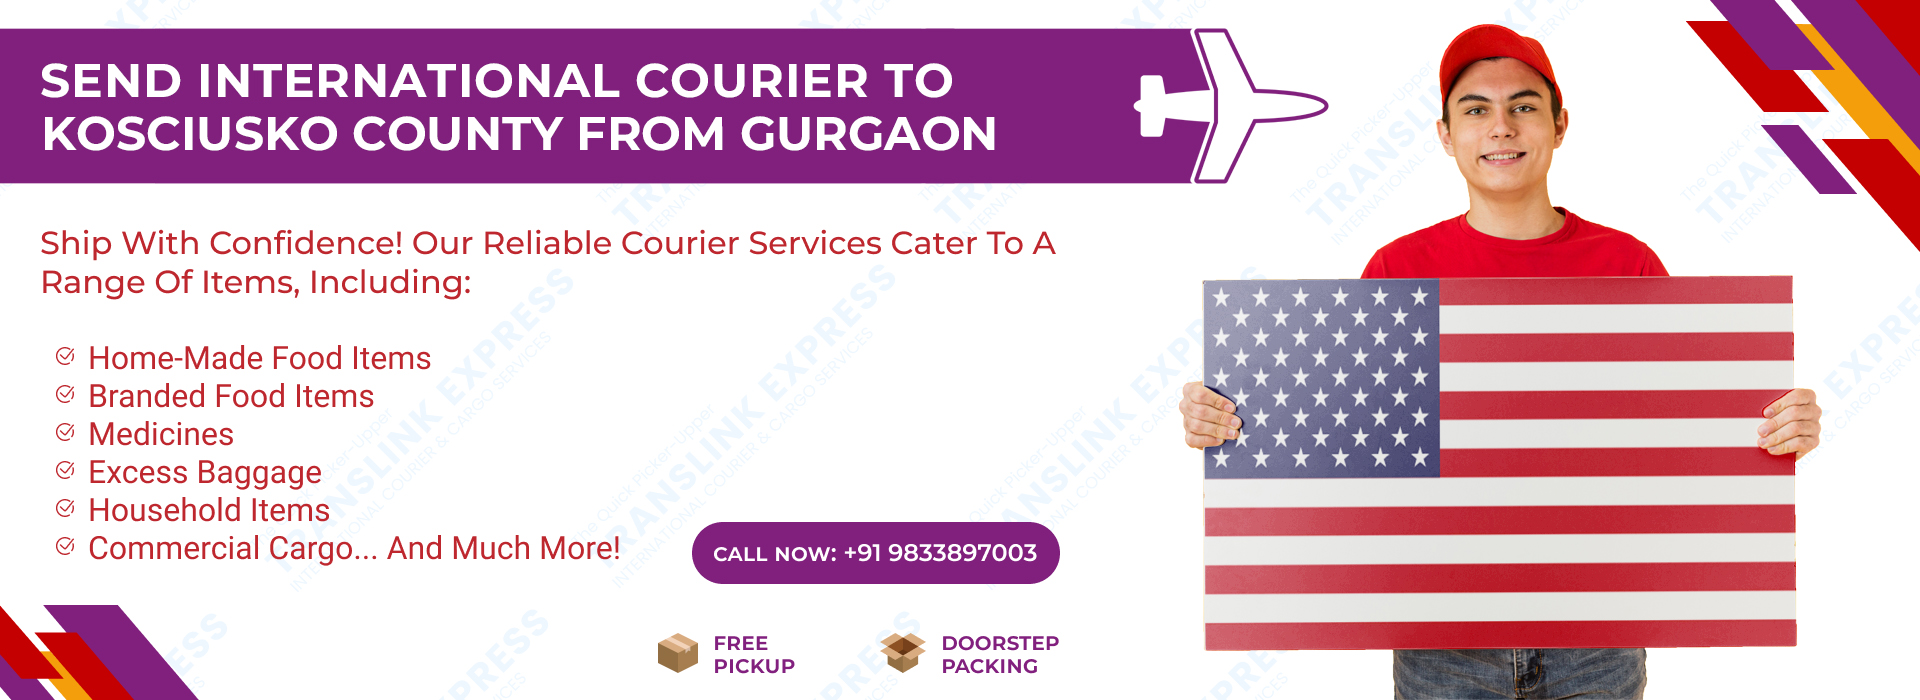 Courier to Kosciusko County From Gurgaon